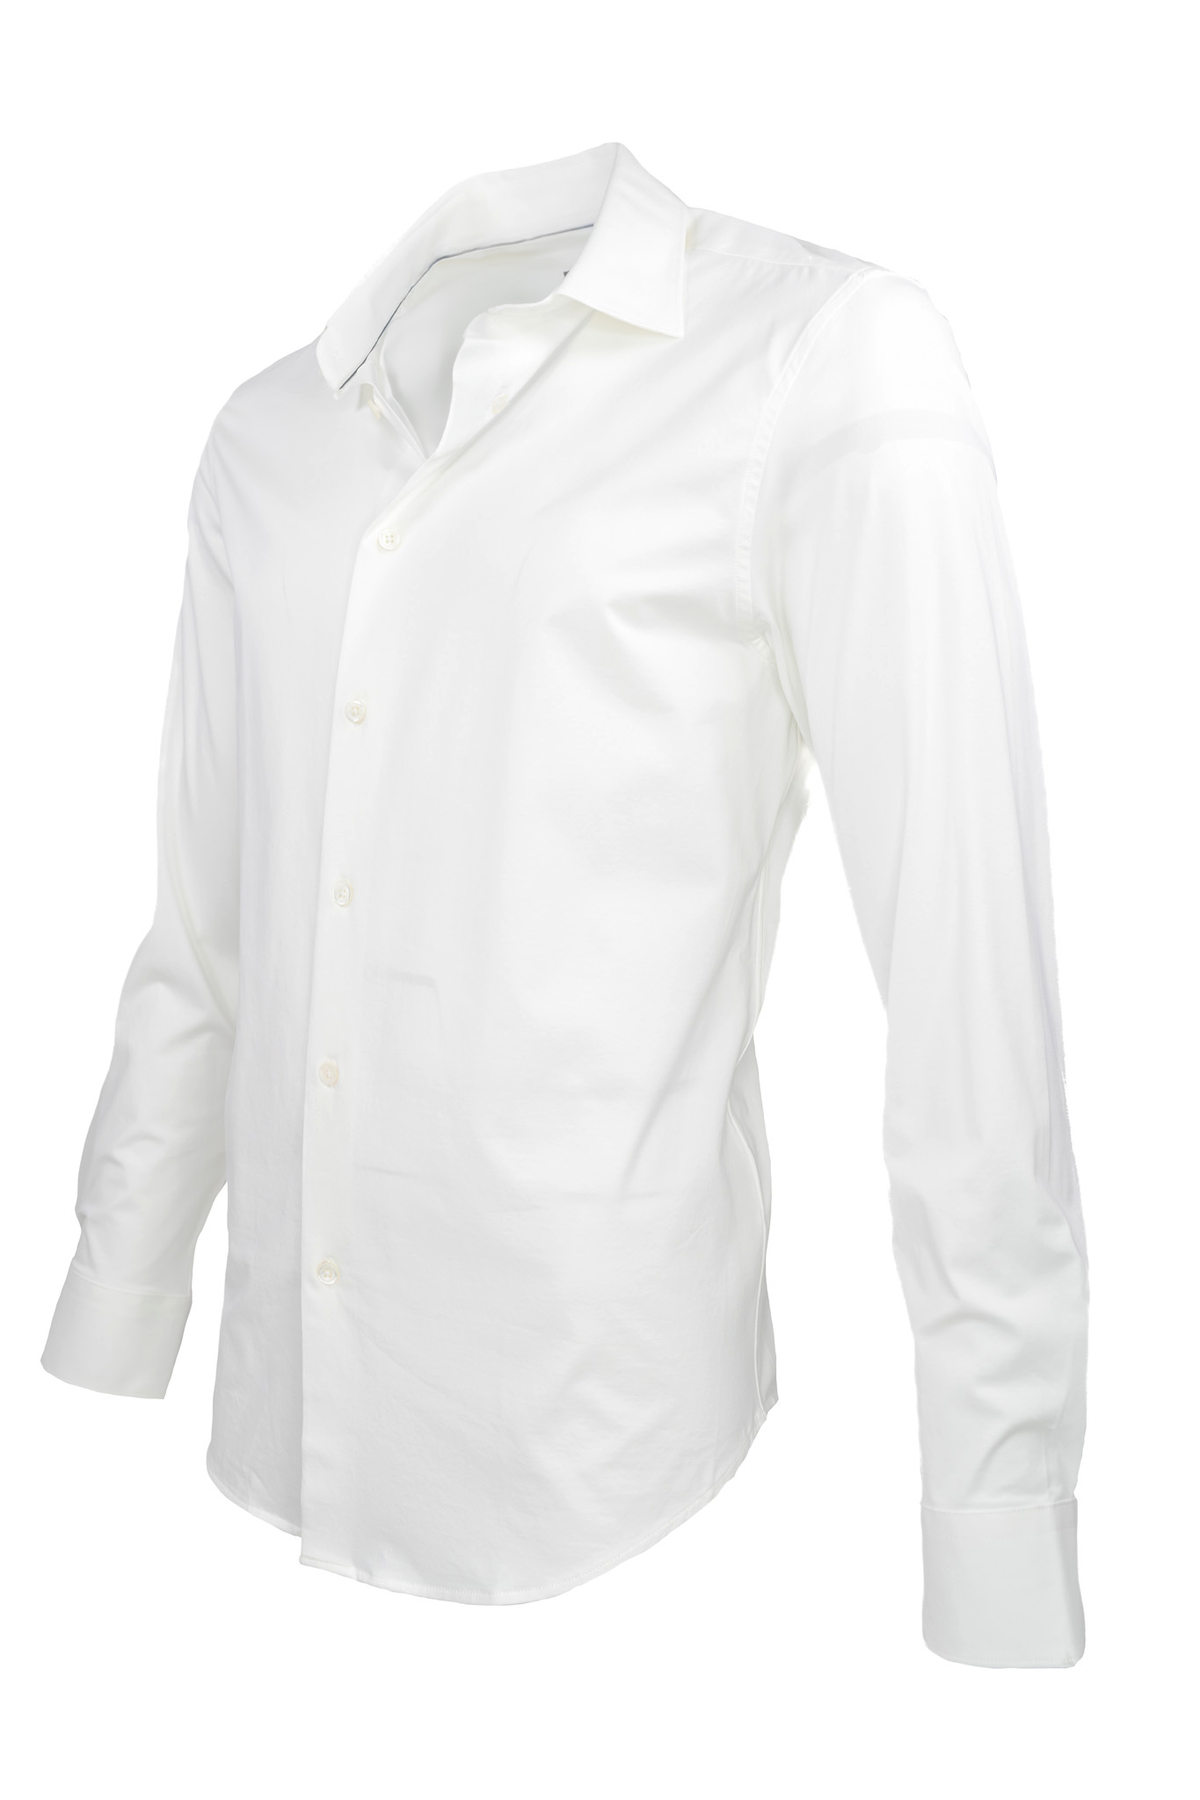 Bugatchi OoohCotton Stretch Shirt White